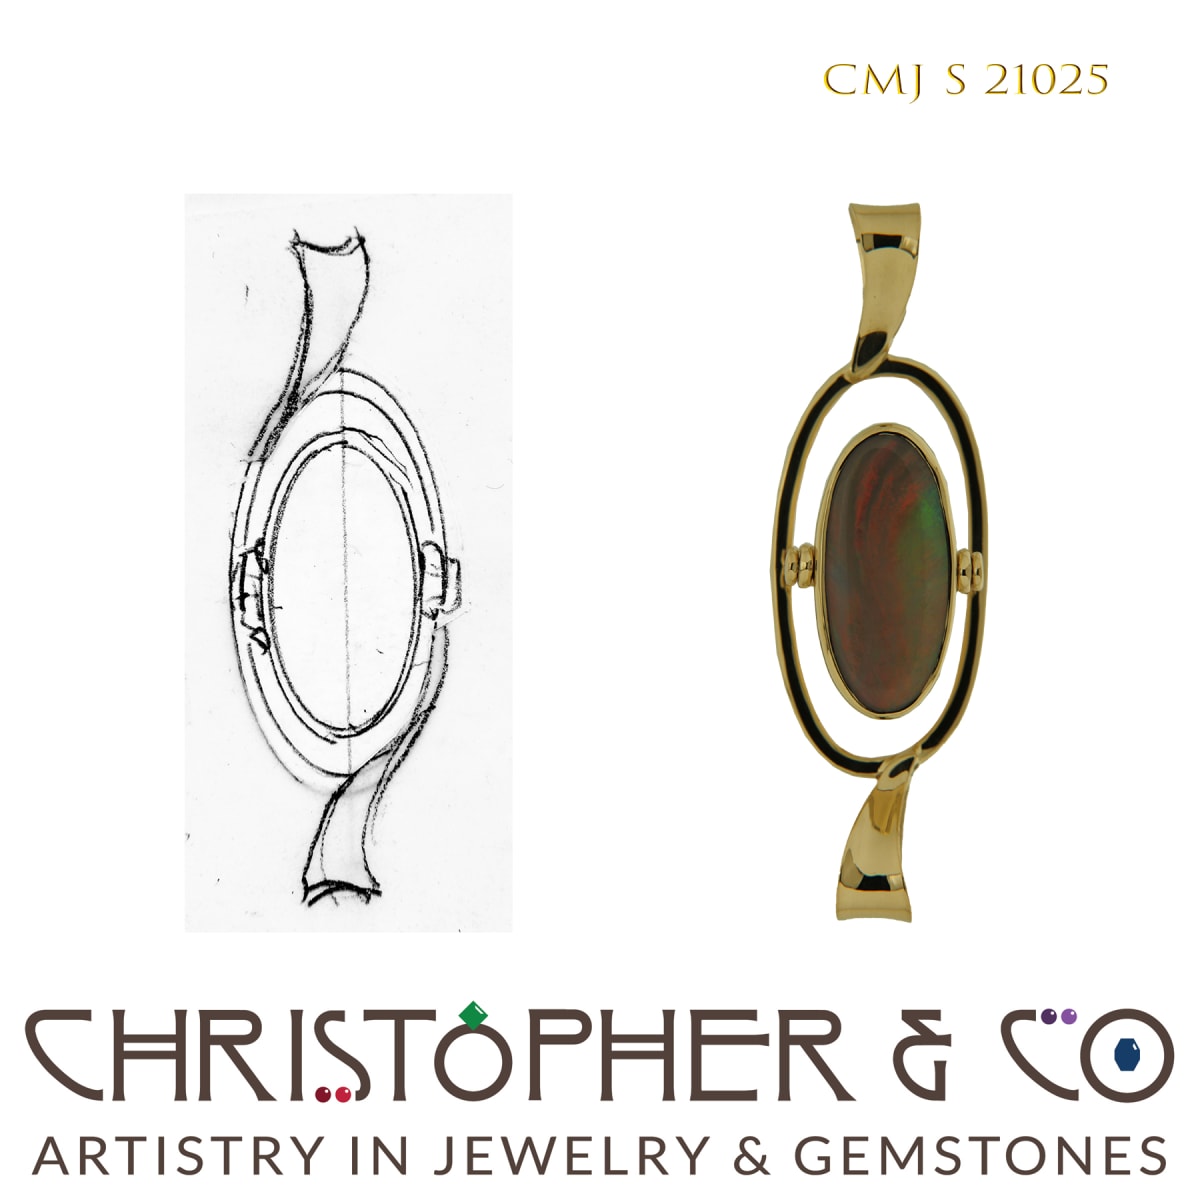 CMJ S 21025 Gold Pendant by Christopher M. Jupp set with Australian Opal  Image: CMJ S 21025 Gold Pendant by Christopher M. Jupp set with Australian Opal